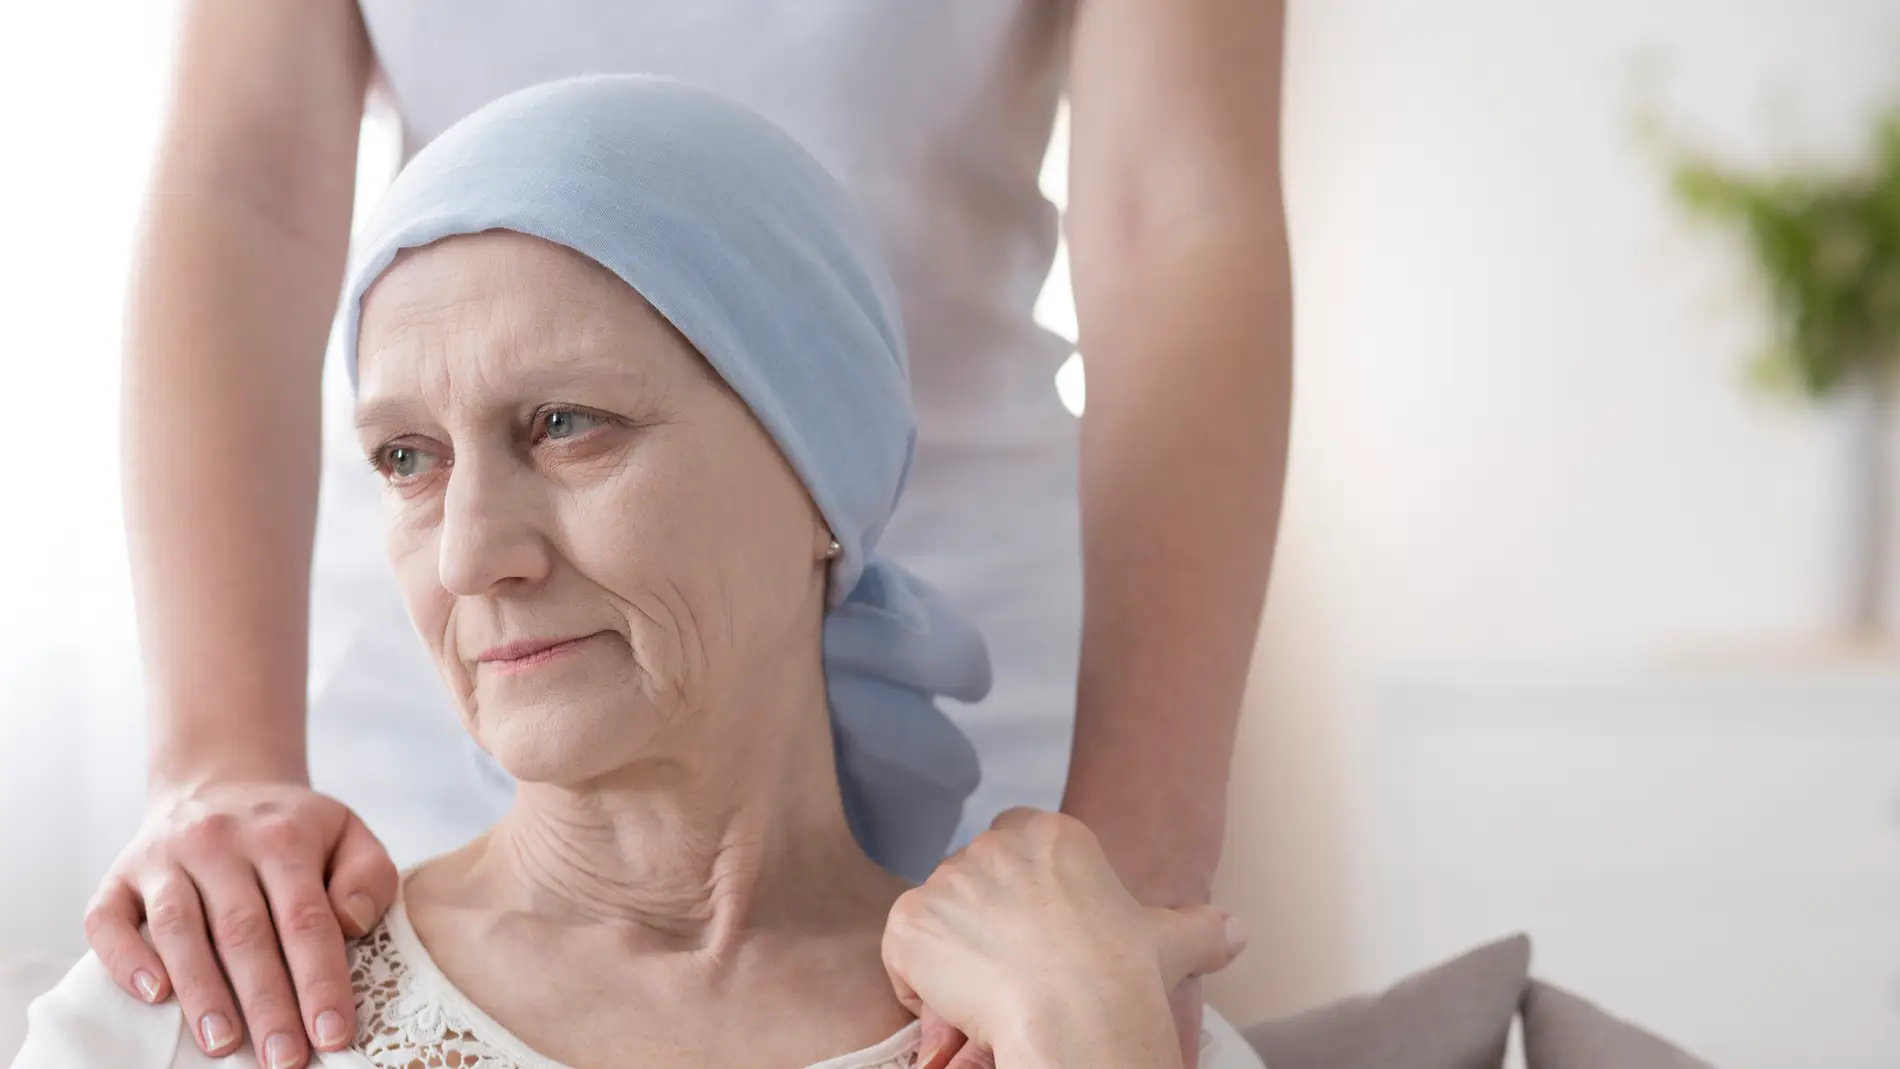 Mujer mayor con cáncer